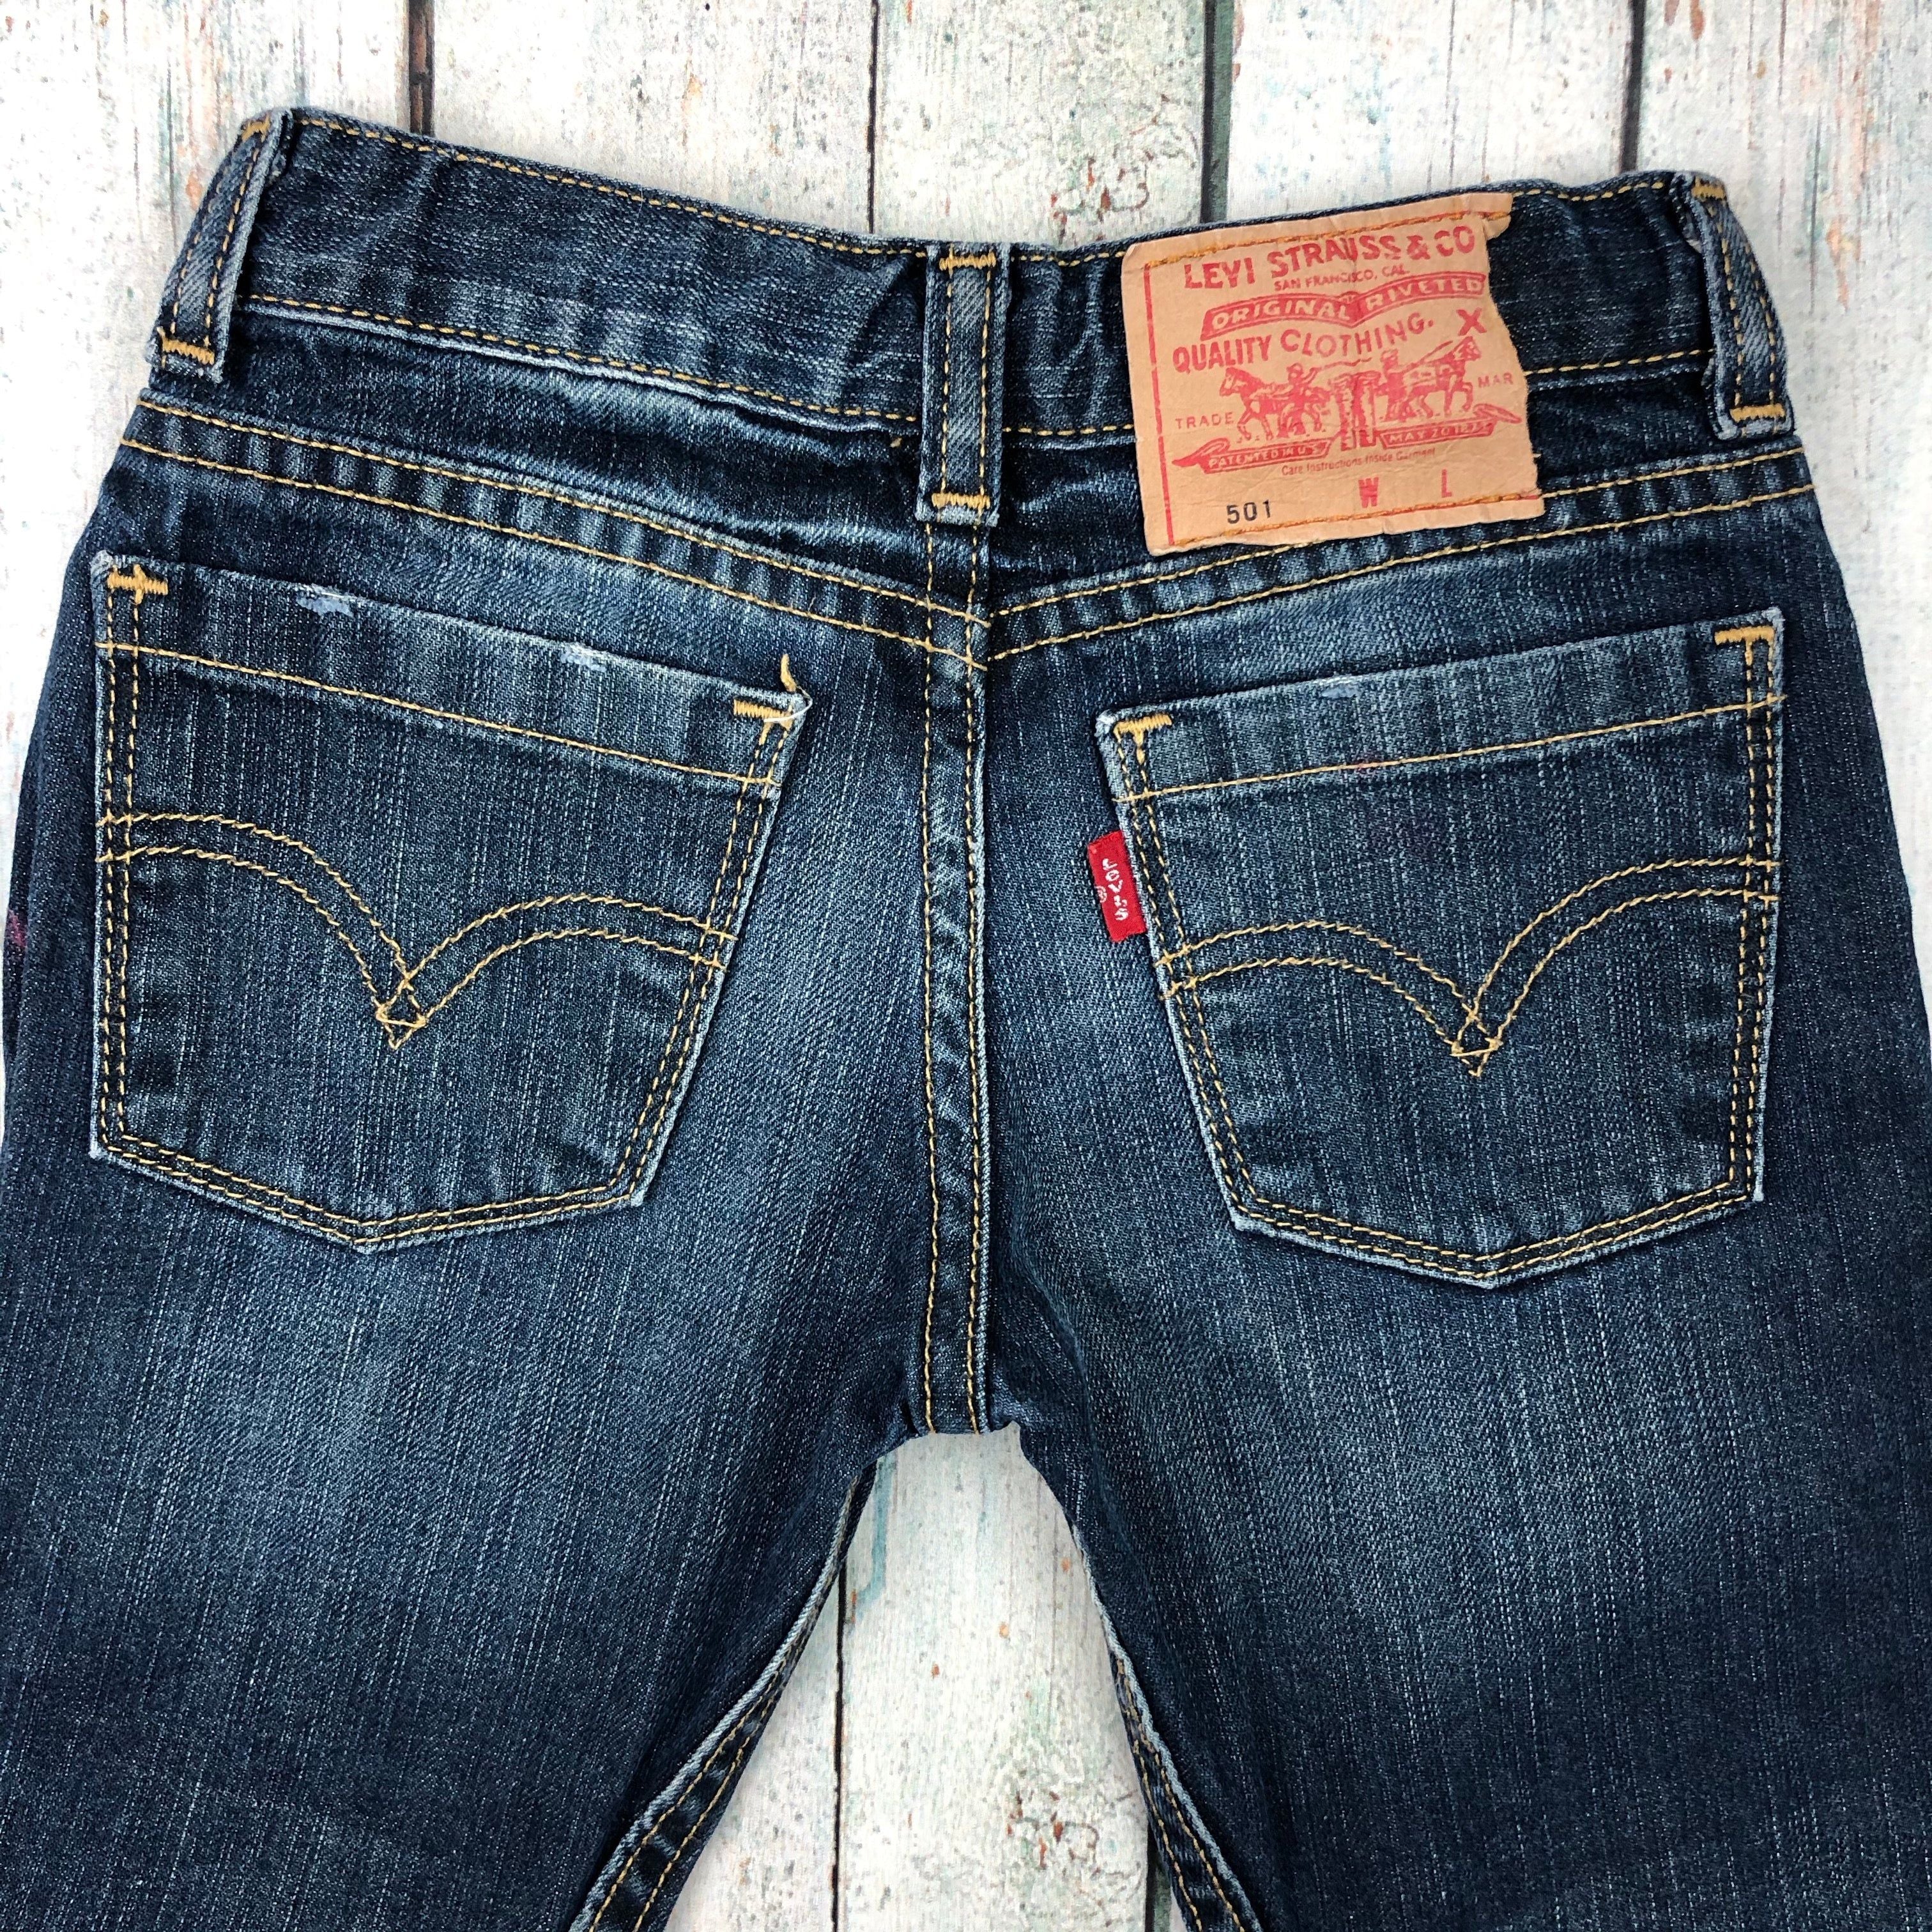 Levis 501 Kids Button Fly Jeans - Size 